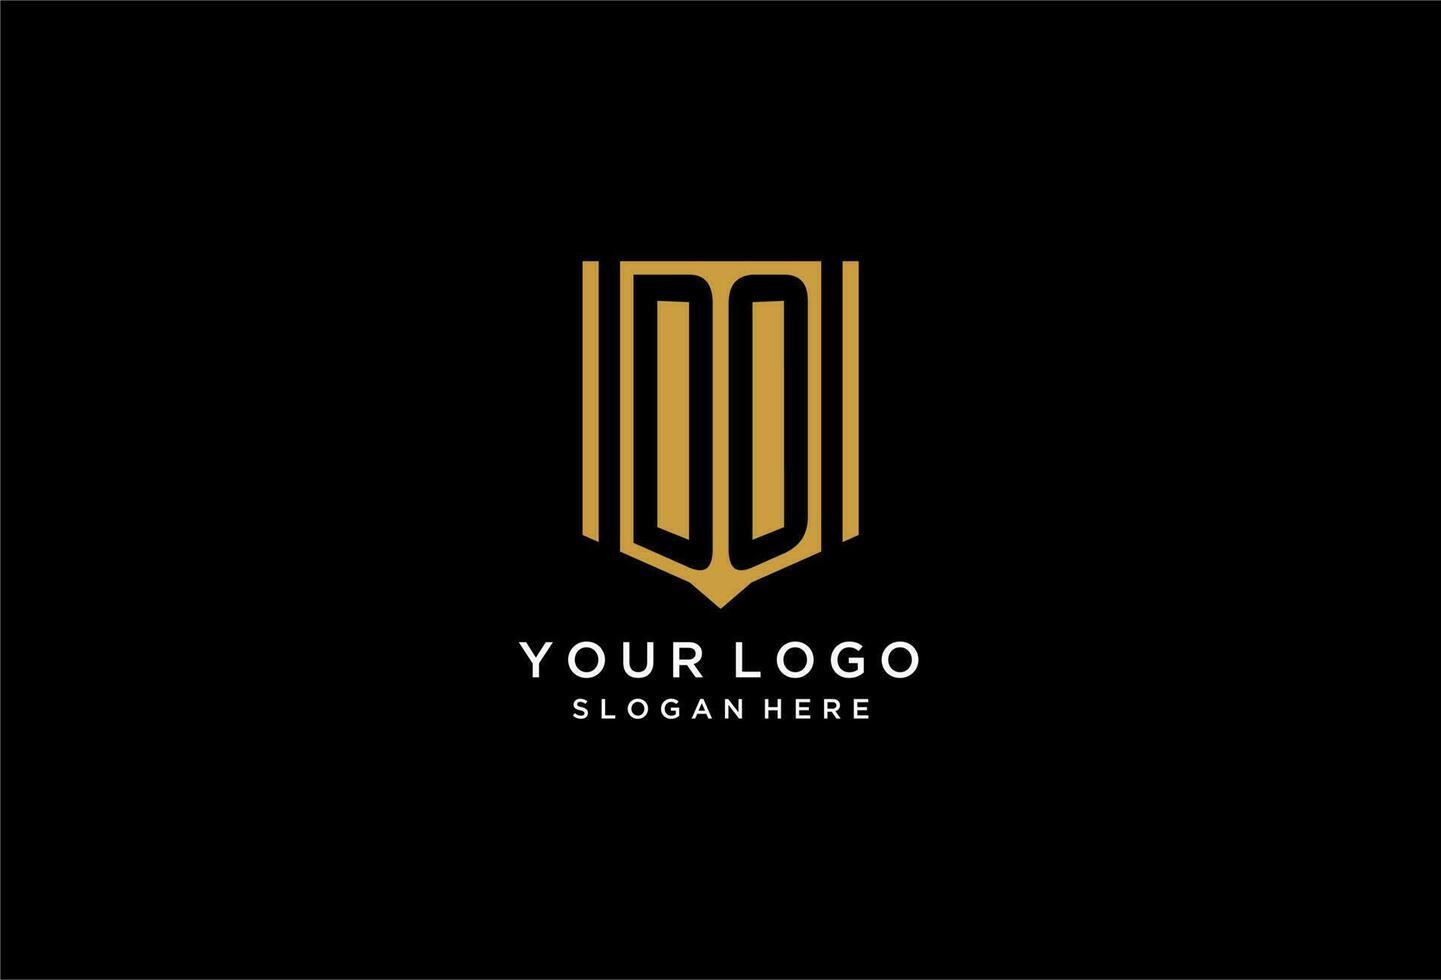 DO monogram logo with geometric shield icon design vector